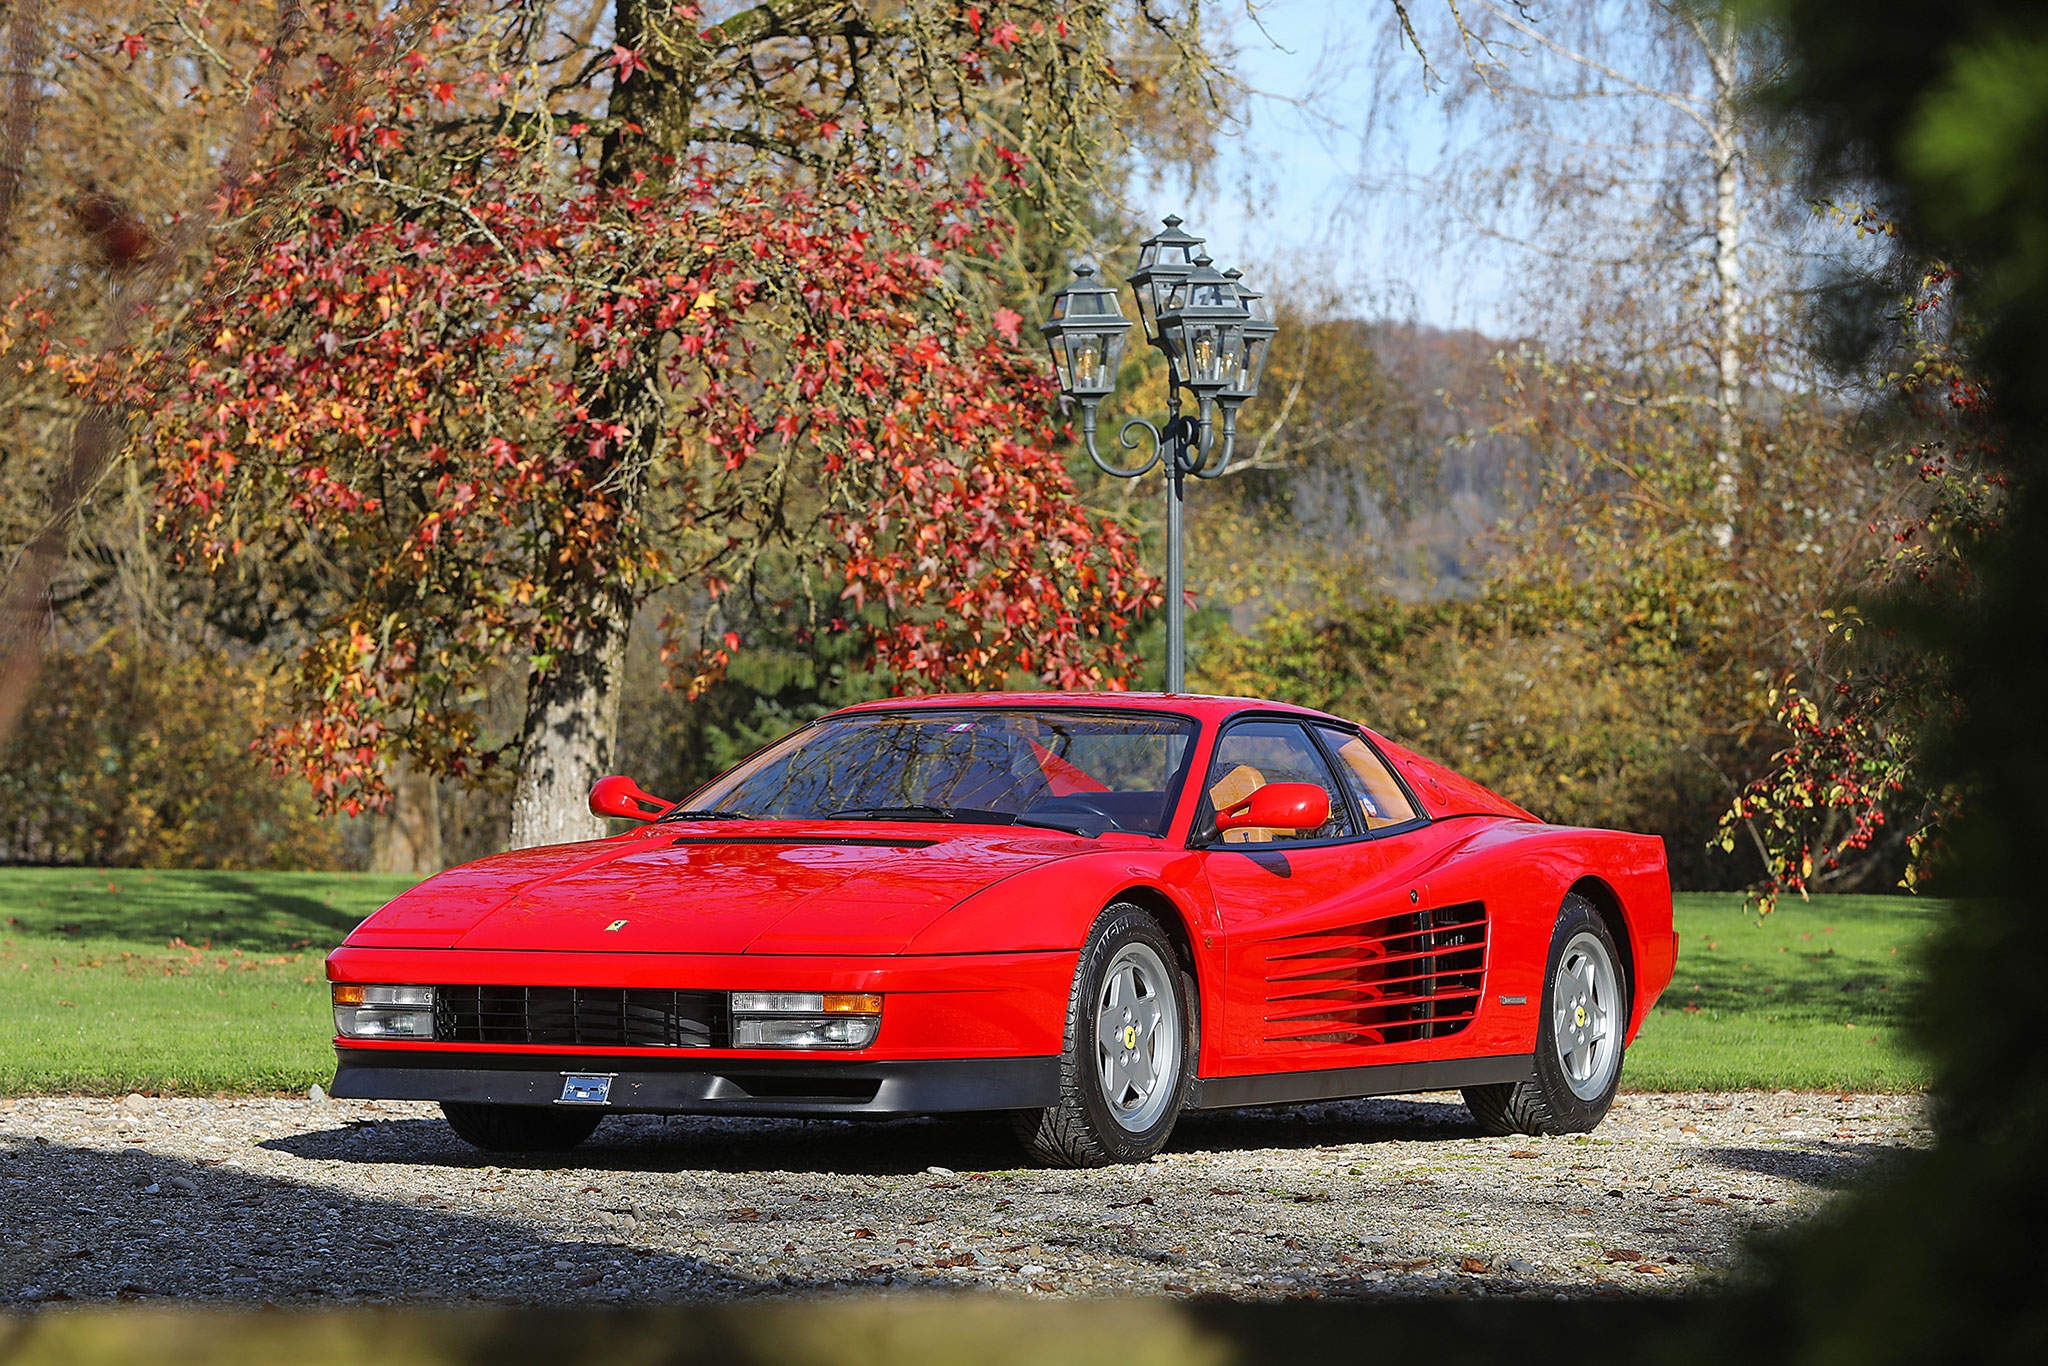 1991 Ferrari Testarossa deux propriétaires et 25 700 kilomètre.